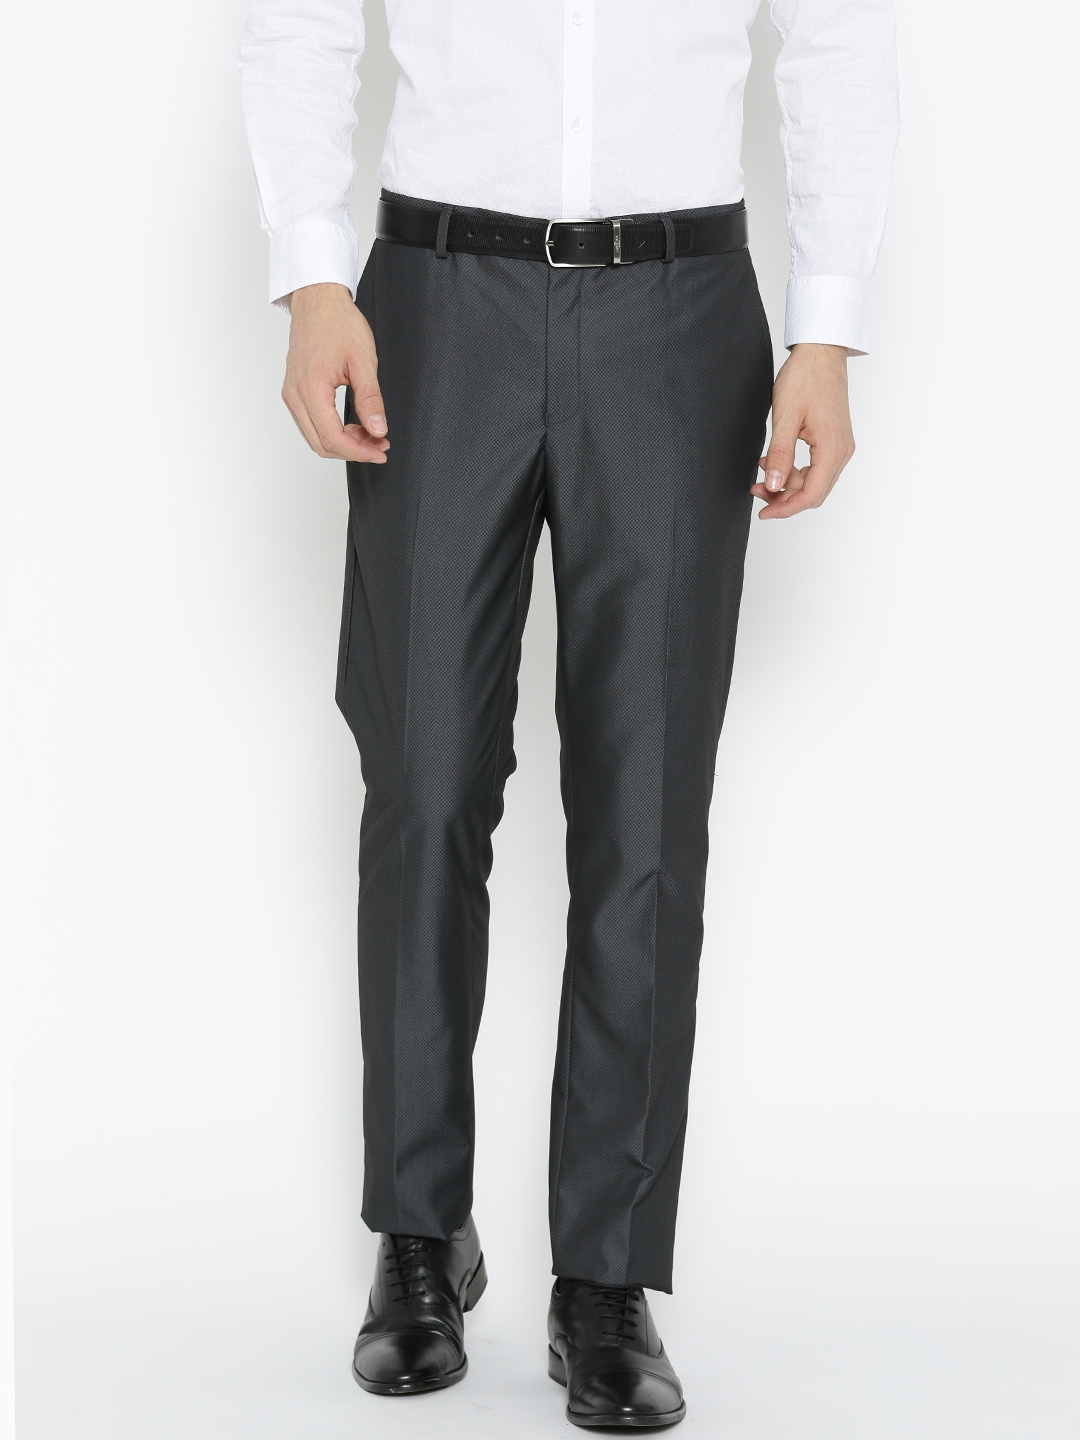 Buy Blackberrys Men Charcoal Grey Sharp Fit Self Design Formal Trousers   Trousers for Men 2193298  Myntra